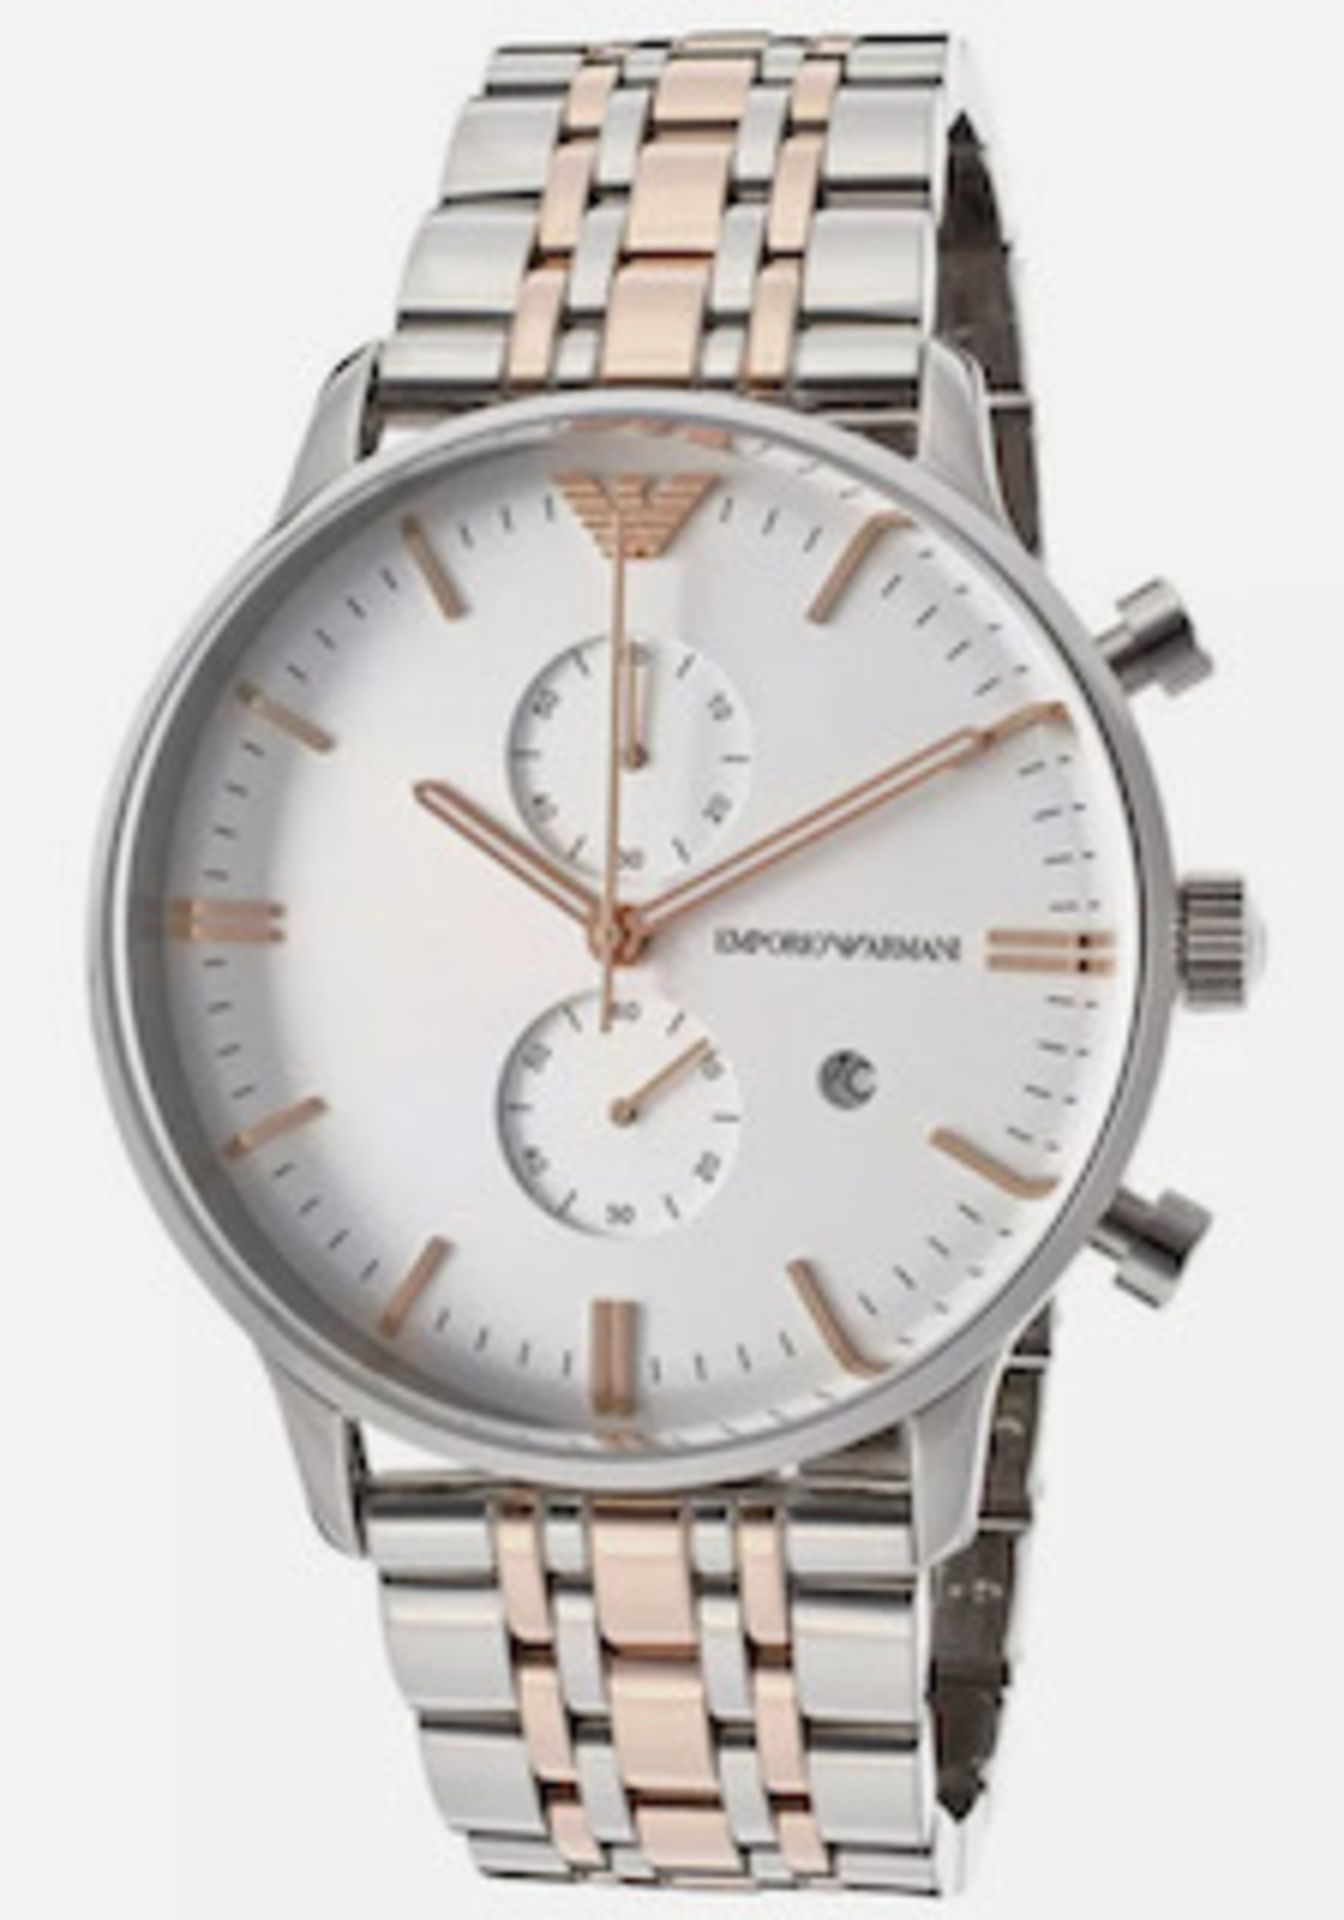 Emporio Armani AR0399 Men's Gianni Stainless Steel Bracelet Chronograph Watch - Image 2 of 7